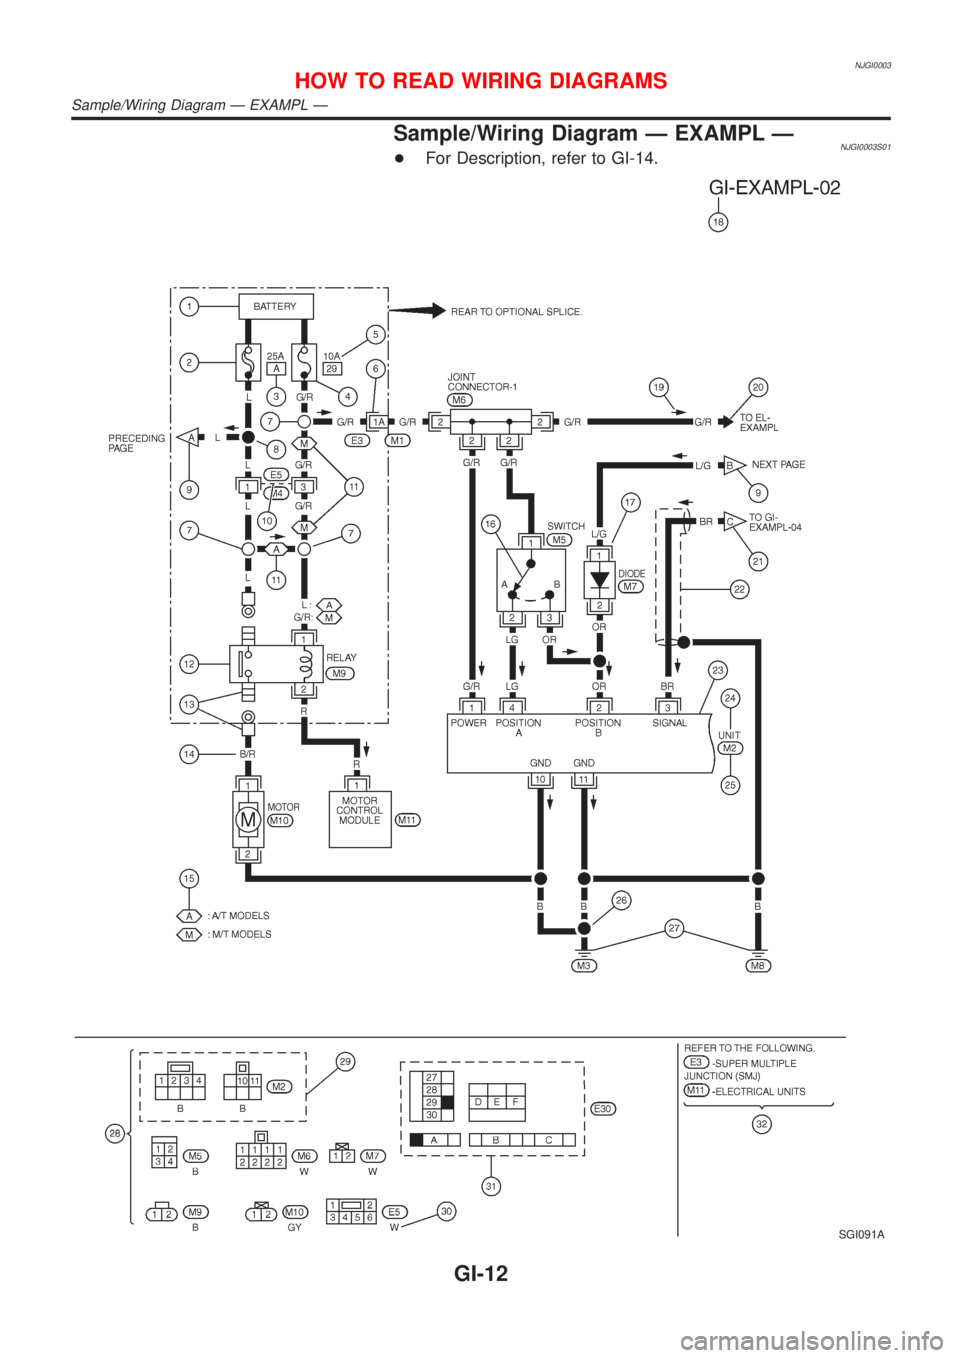 NISSAN ALMERA N16 2001  Electronic Repair Manual NJGI0003
Sample/Wiring Diagram Ð EXAMPL ÐNJGI0003S01+For Description, refer to GI-14.
SGI091A
HOW TO READ WIRING DIAGRAMS
Sample/Wiring Diagram Ð EXAMPL Ð
GI-12 